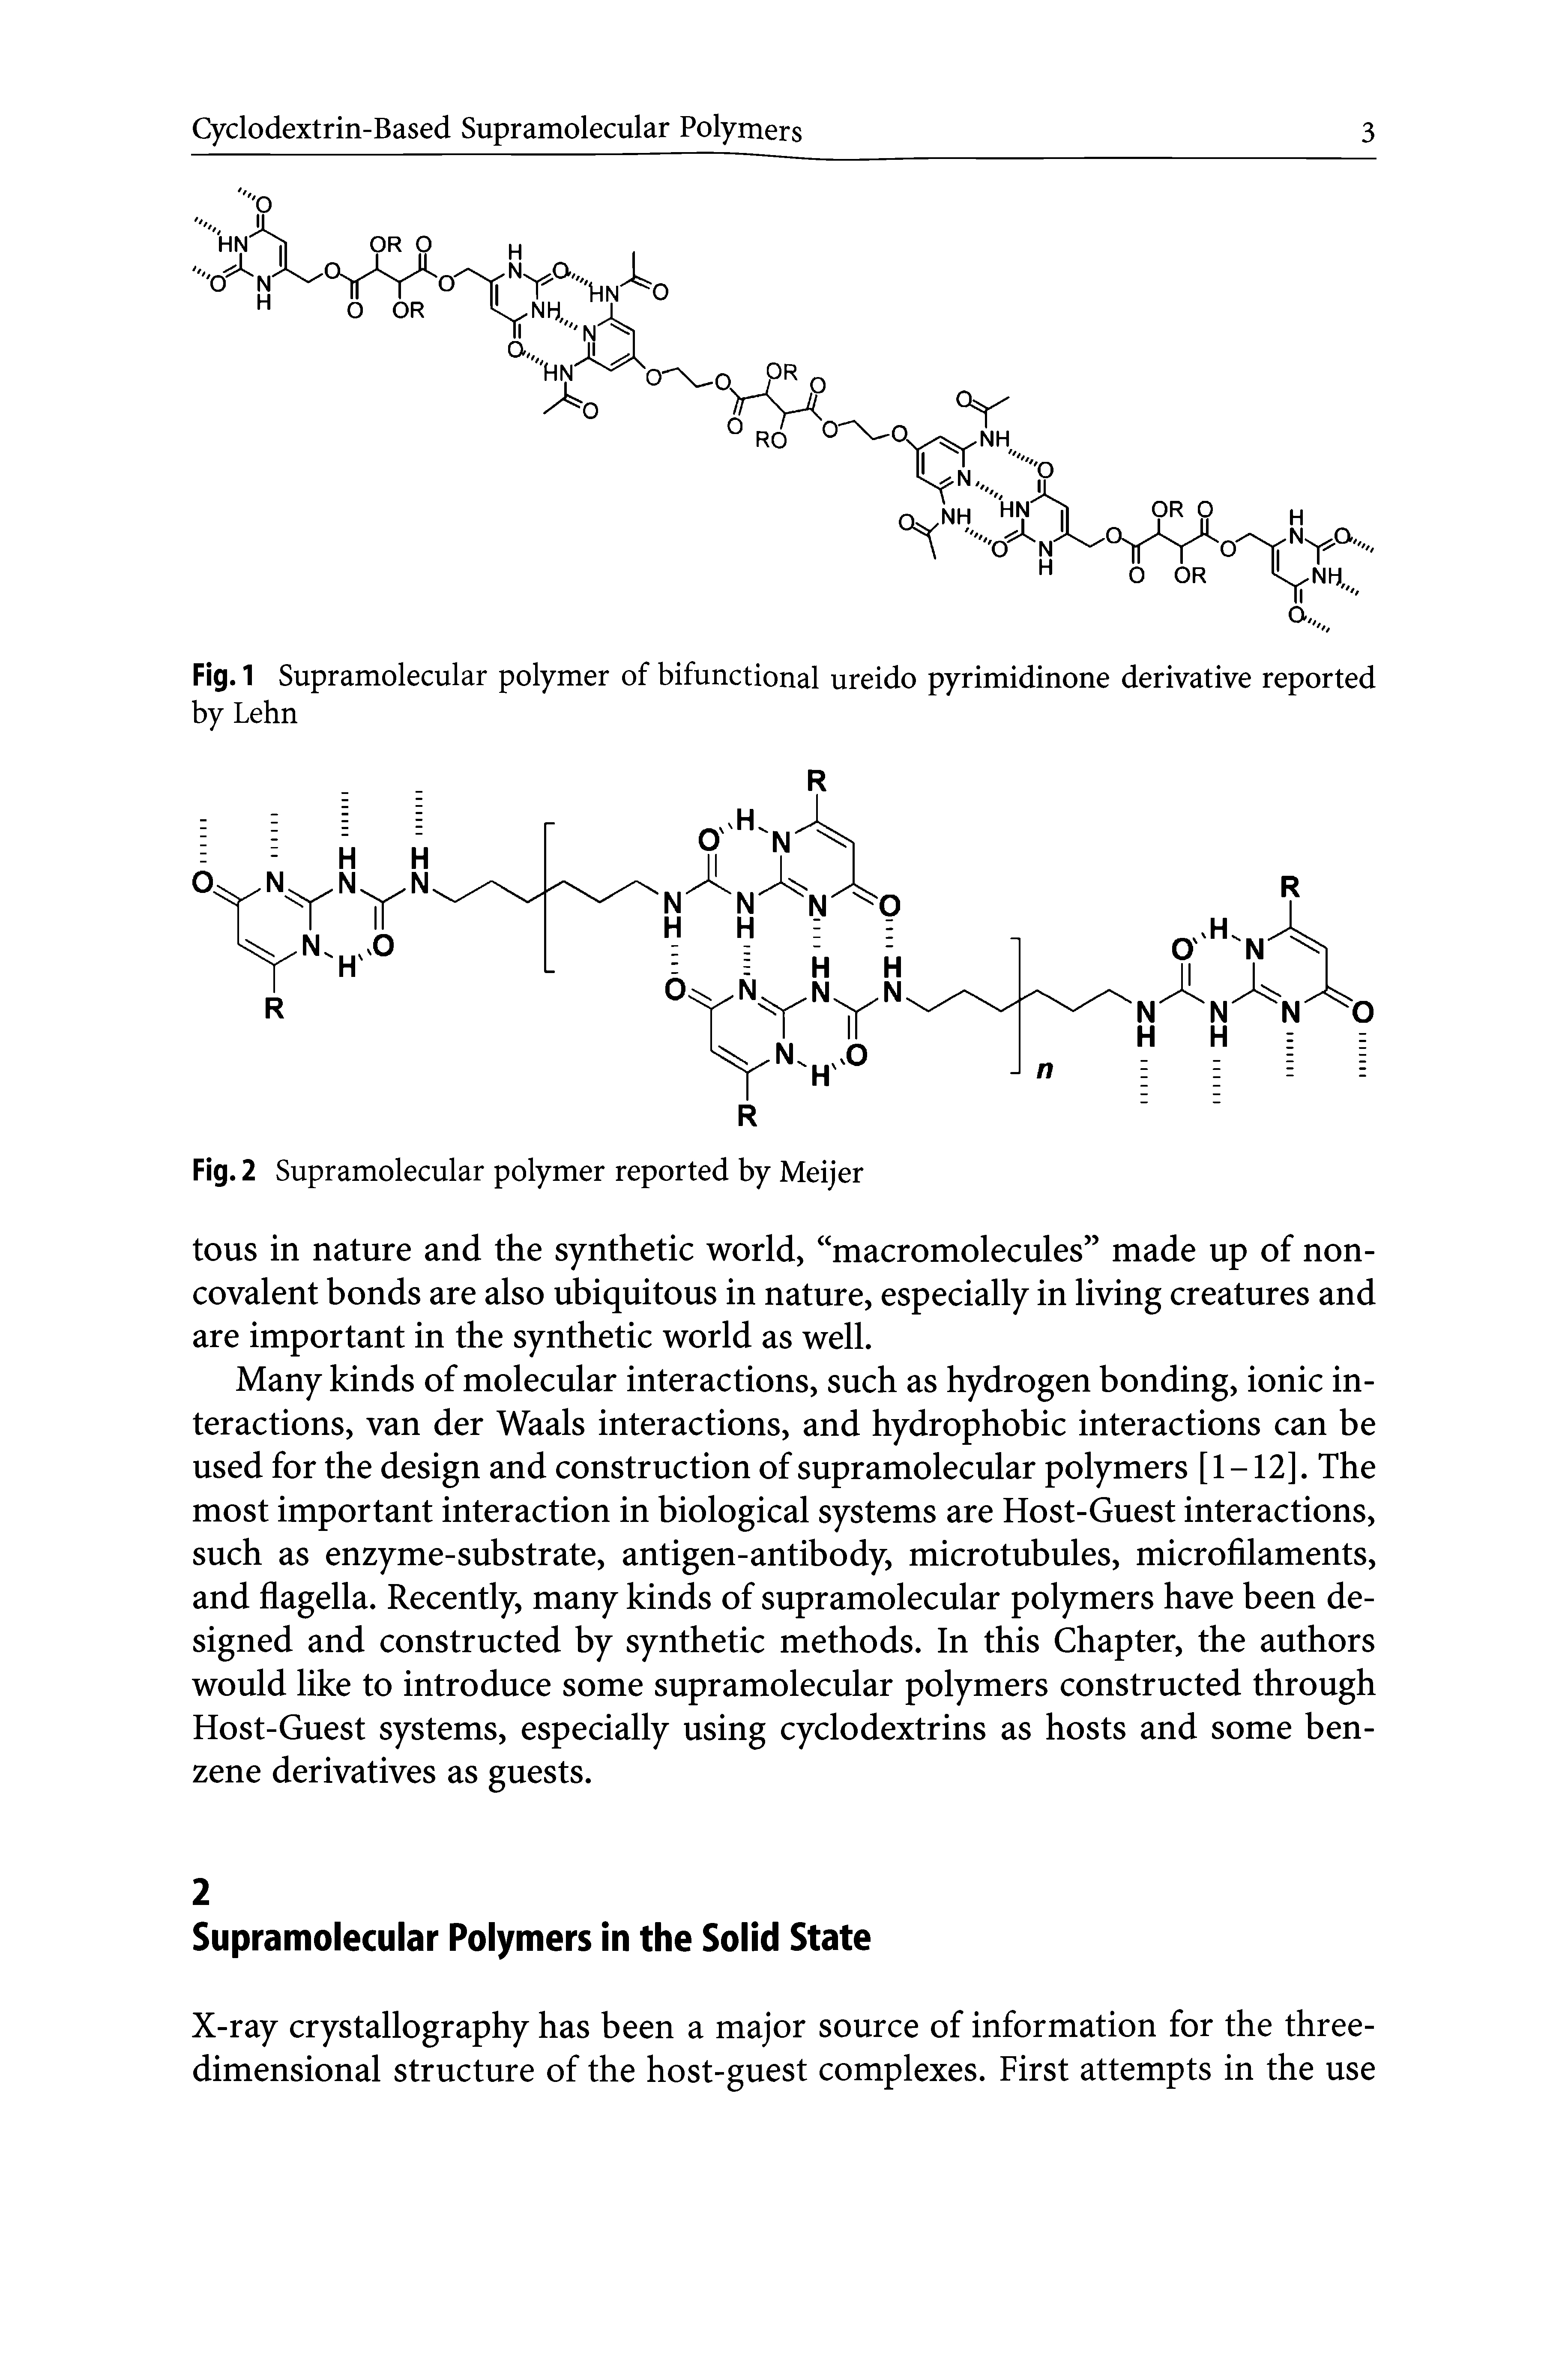 Fig. 1 Supramolecular polymer of bifunctional ureido pyrimidinone derivative reported by Lehn...